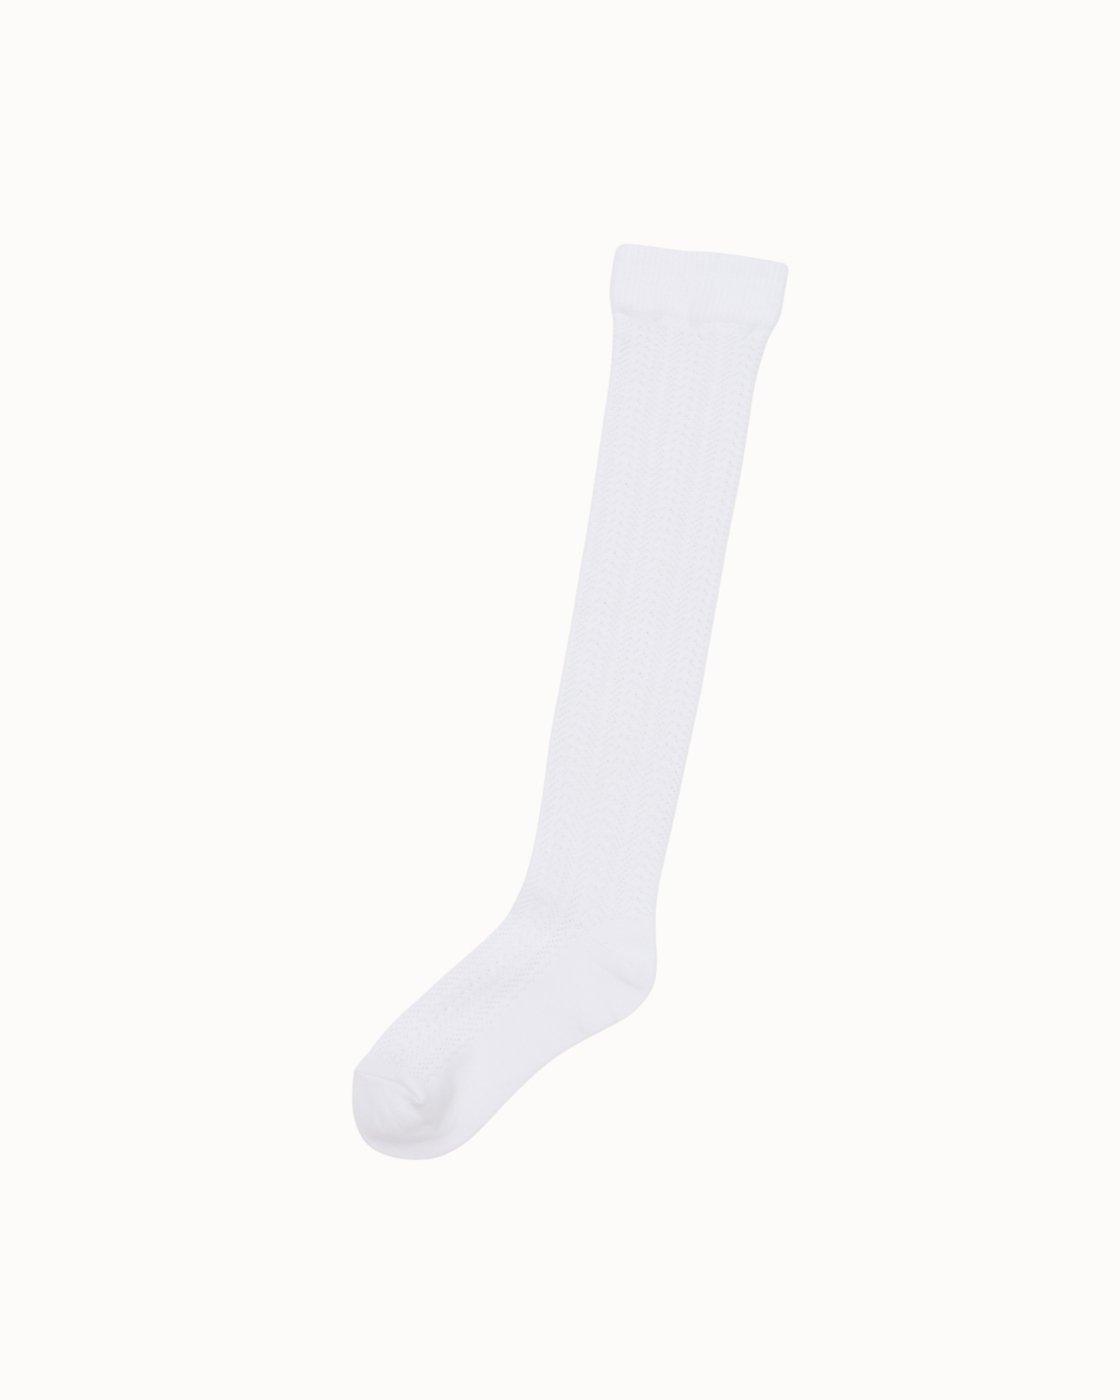 leur logette - Stripe Mesh Socks - White